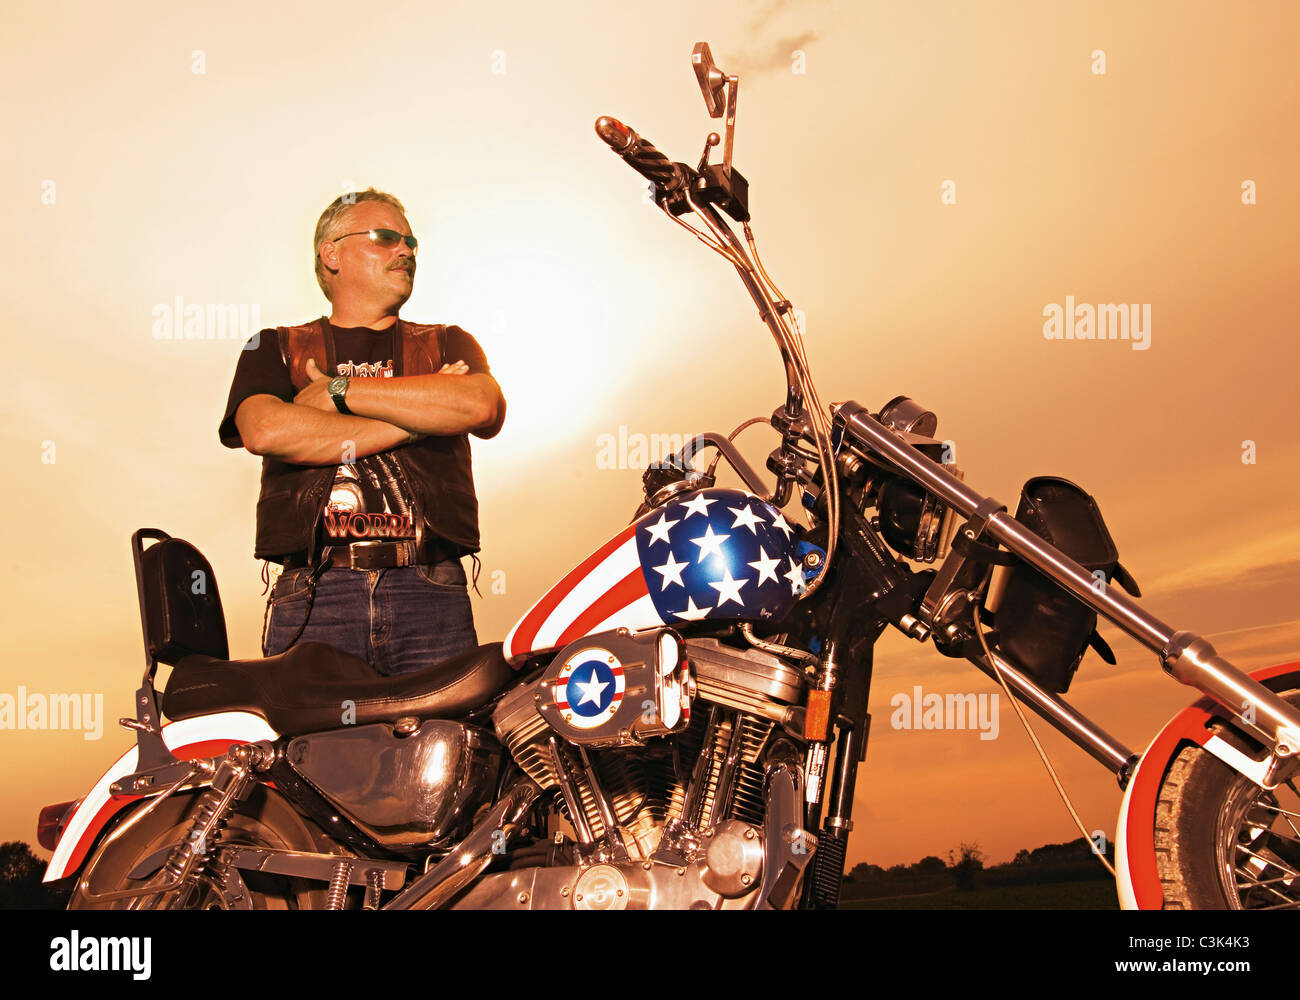 Alemania, Madura motociclista con moto al anochecer Foto de stock